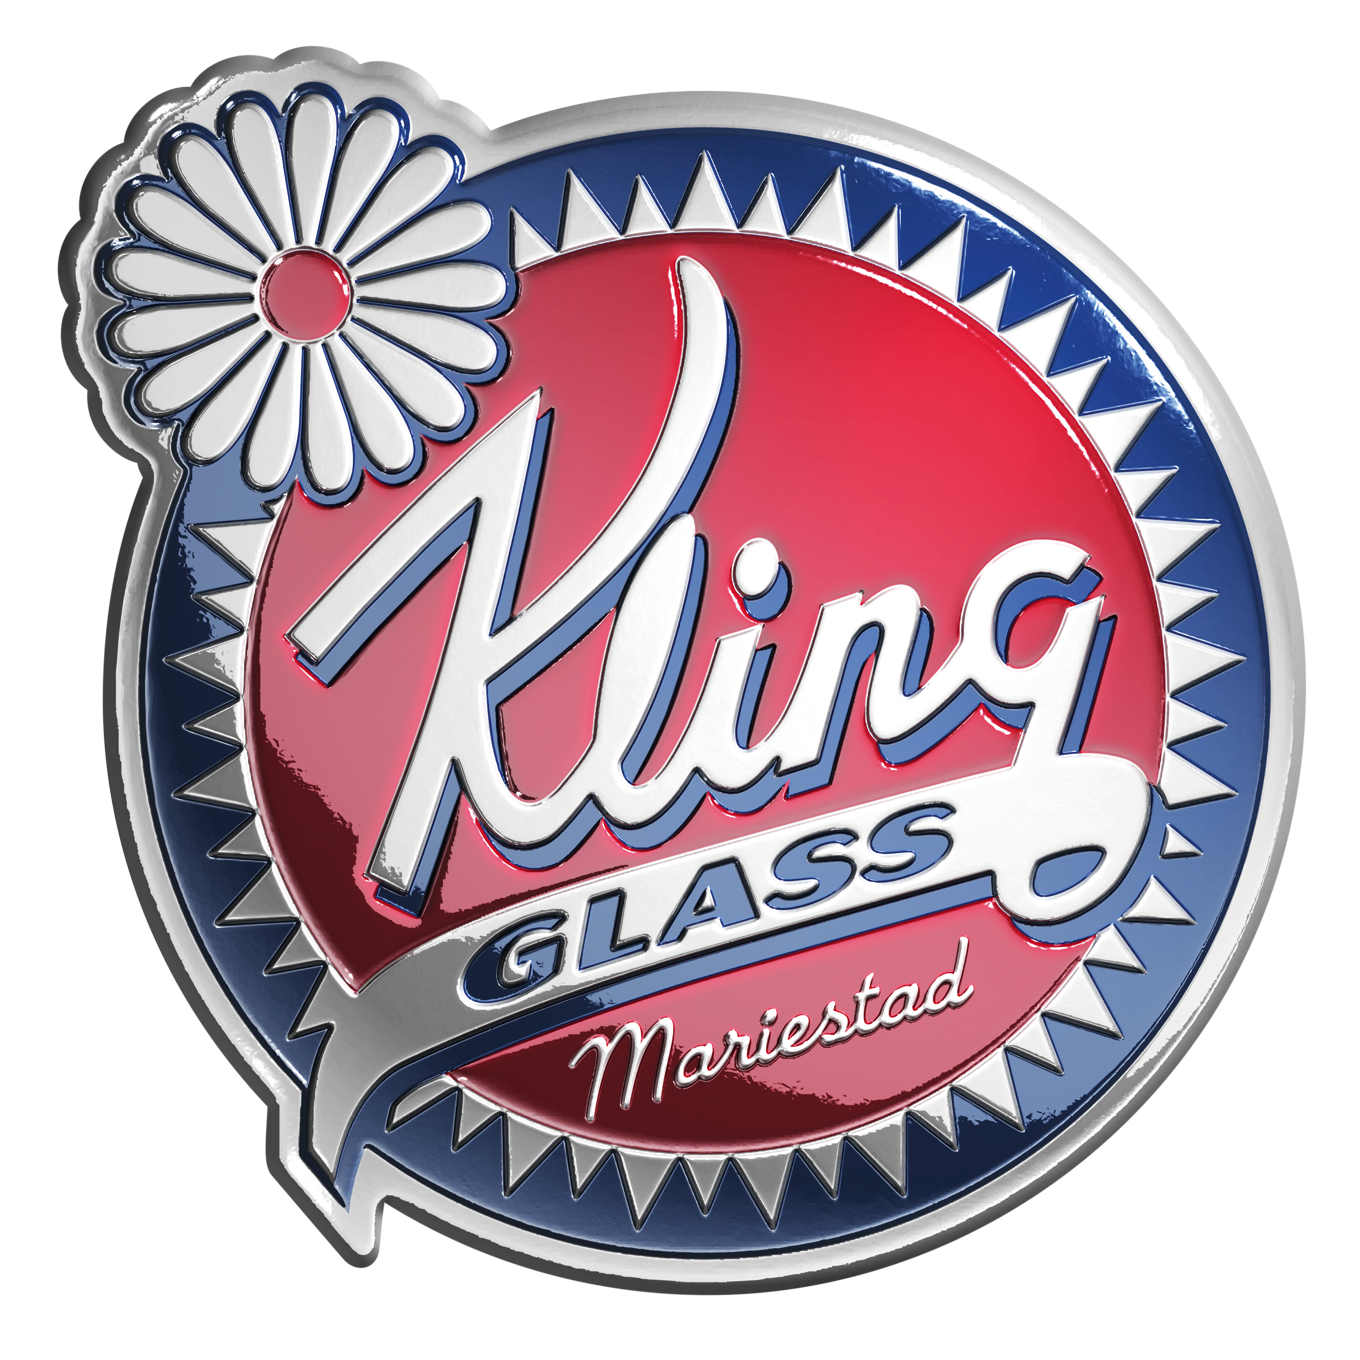 Kling Glass